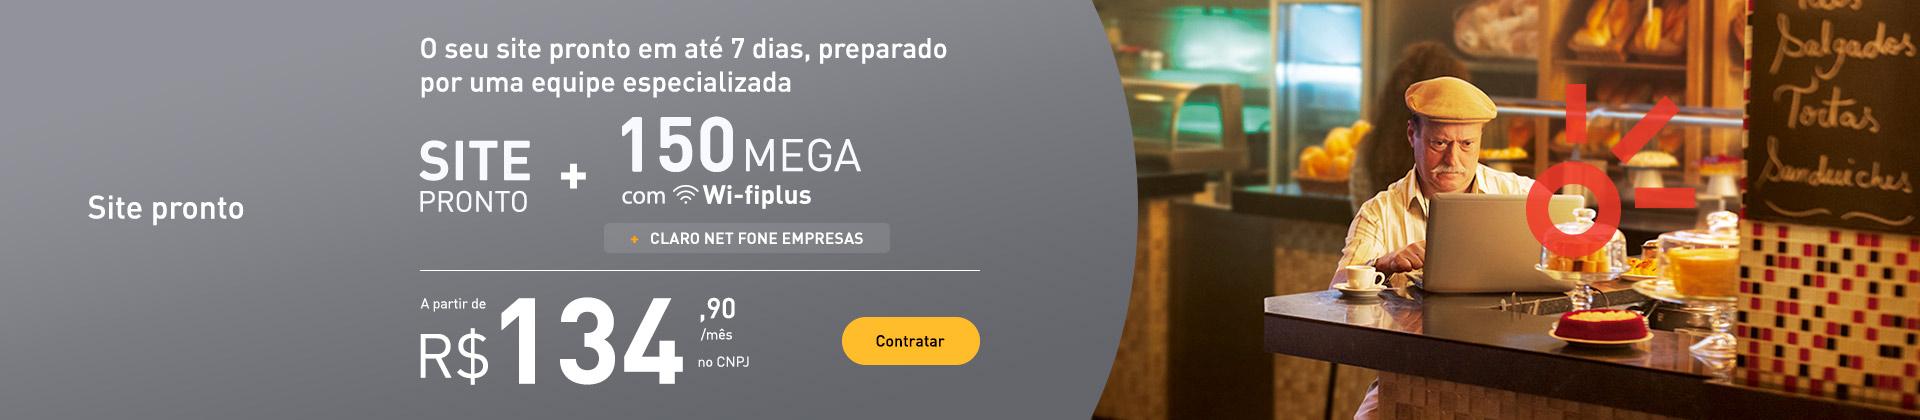 Contrate Site pronto +150 MEGA com Wifiplus + fone ilimitado 21